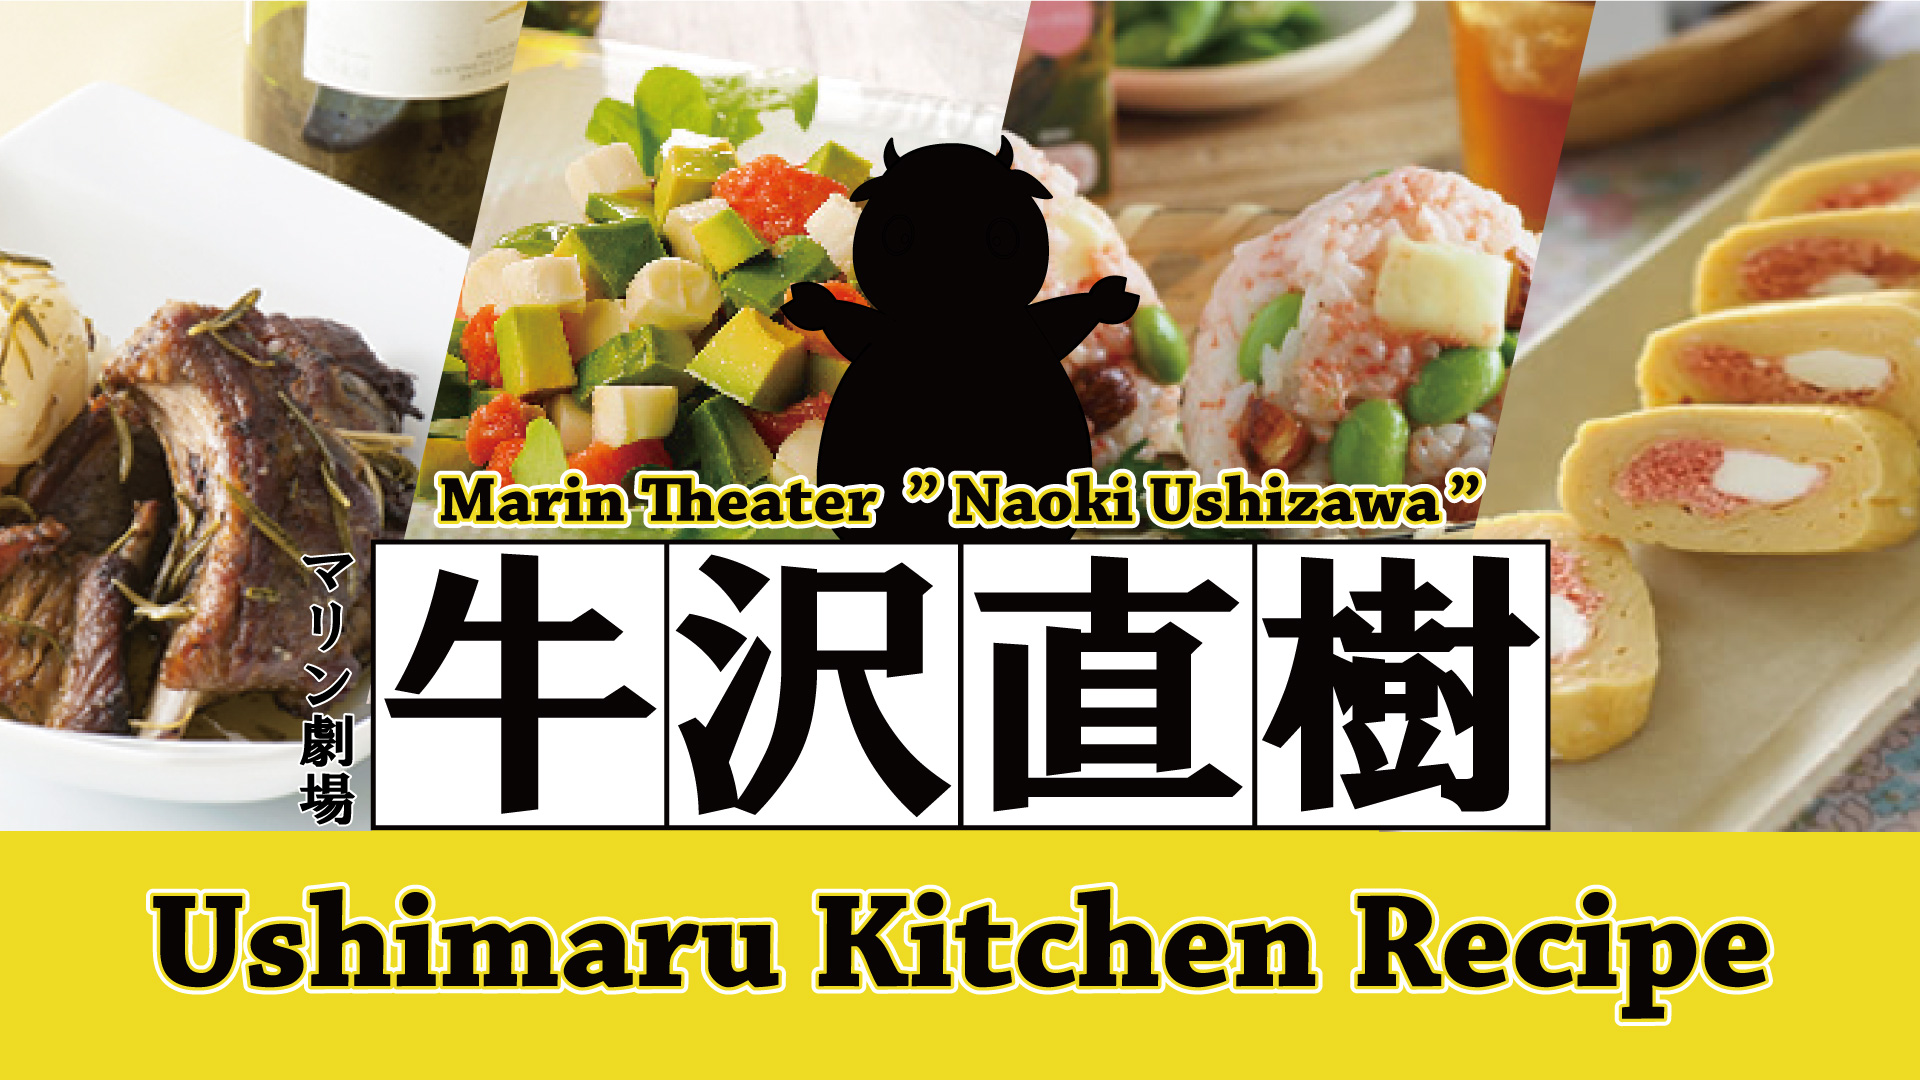 Ushimaru kitchen recipe